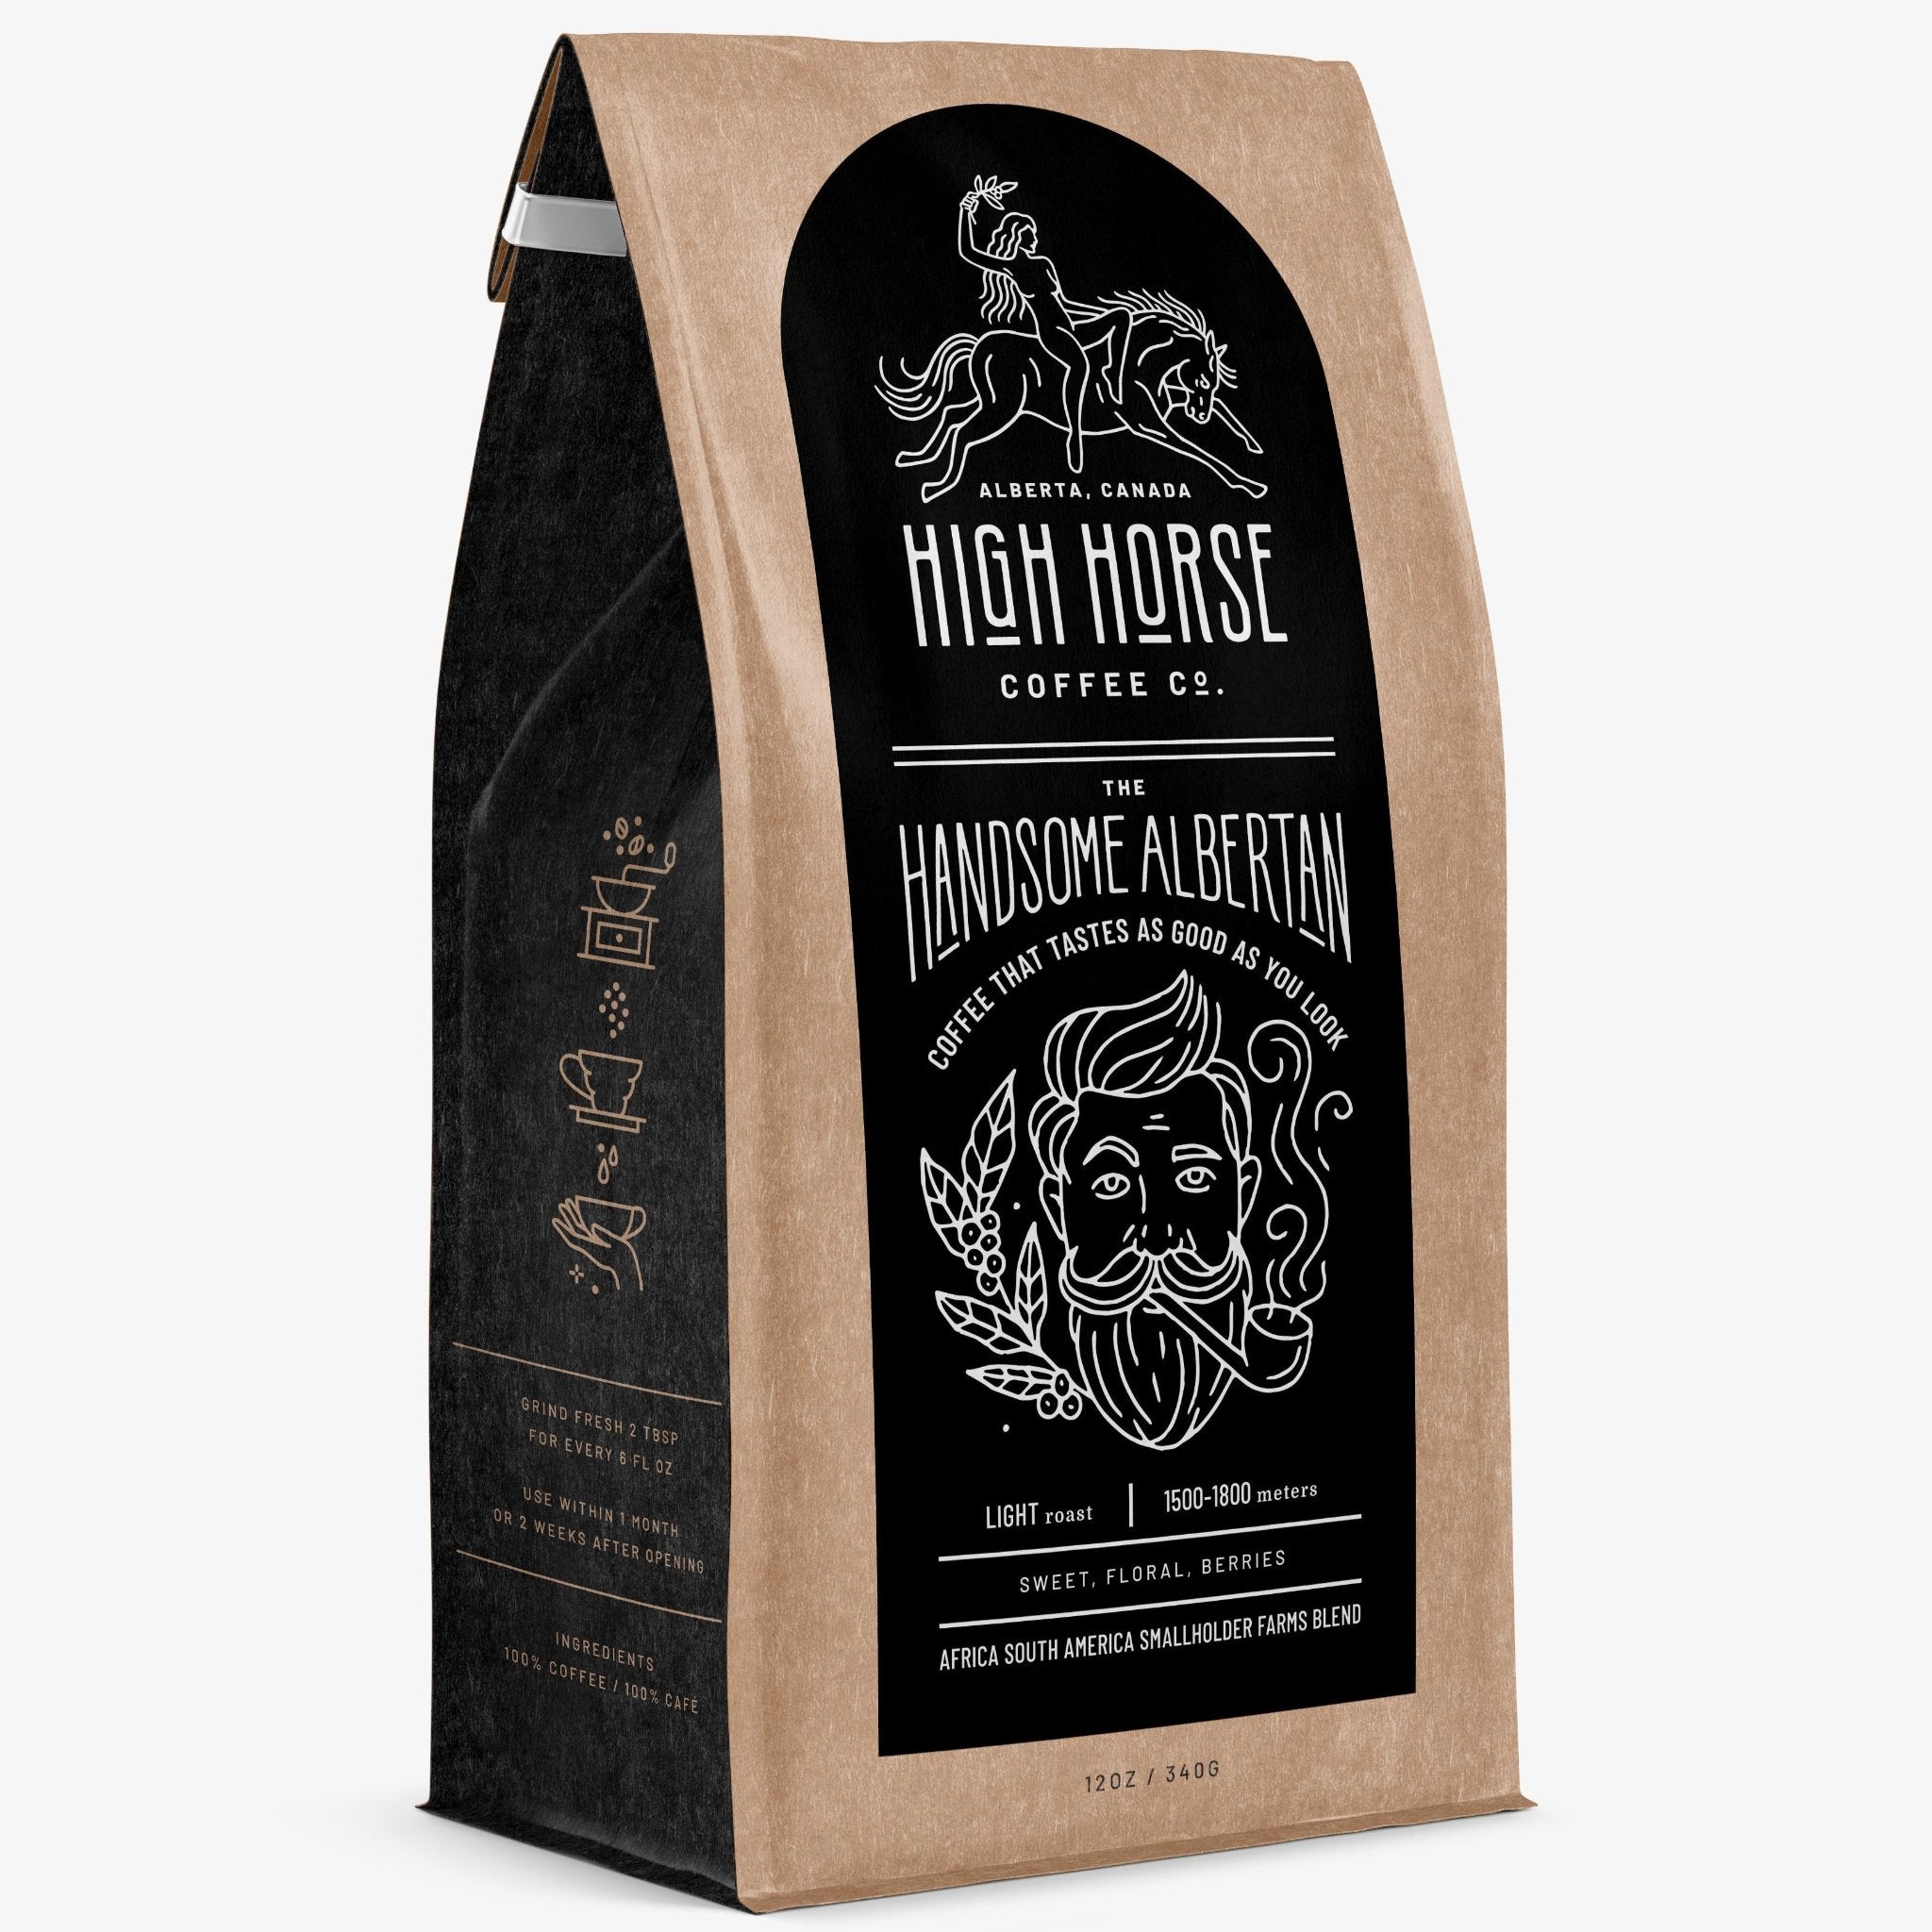 The Handsome Albertan - High Horse Coffee Company